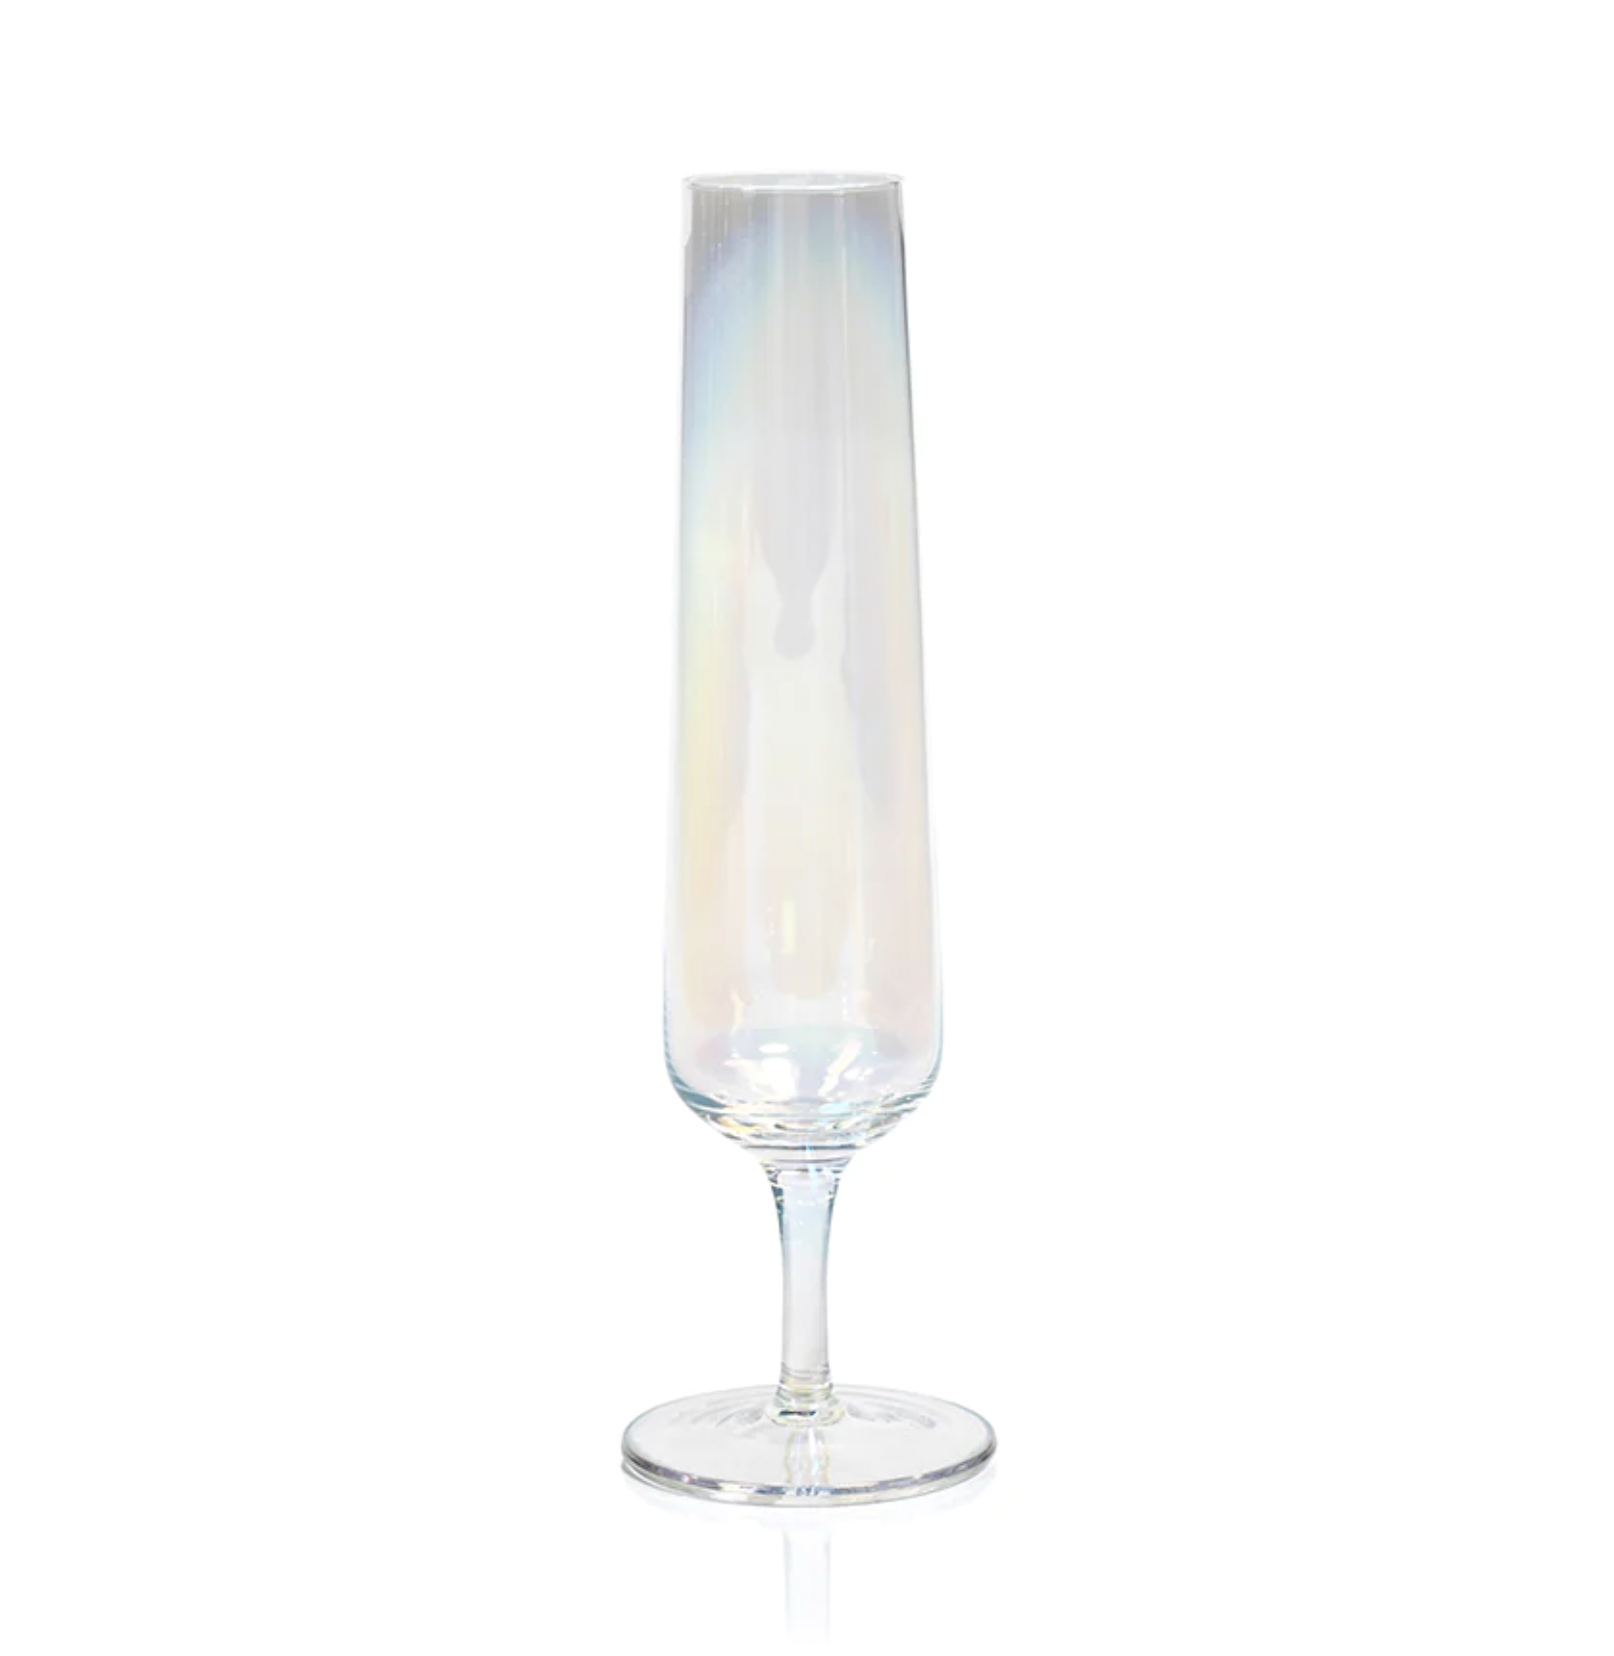 ZODAX Festive Iridescent Champagne Flute